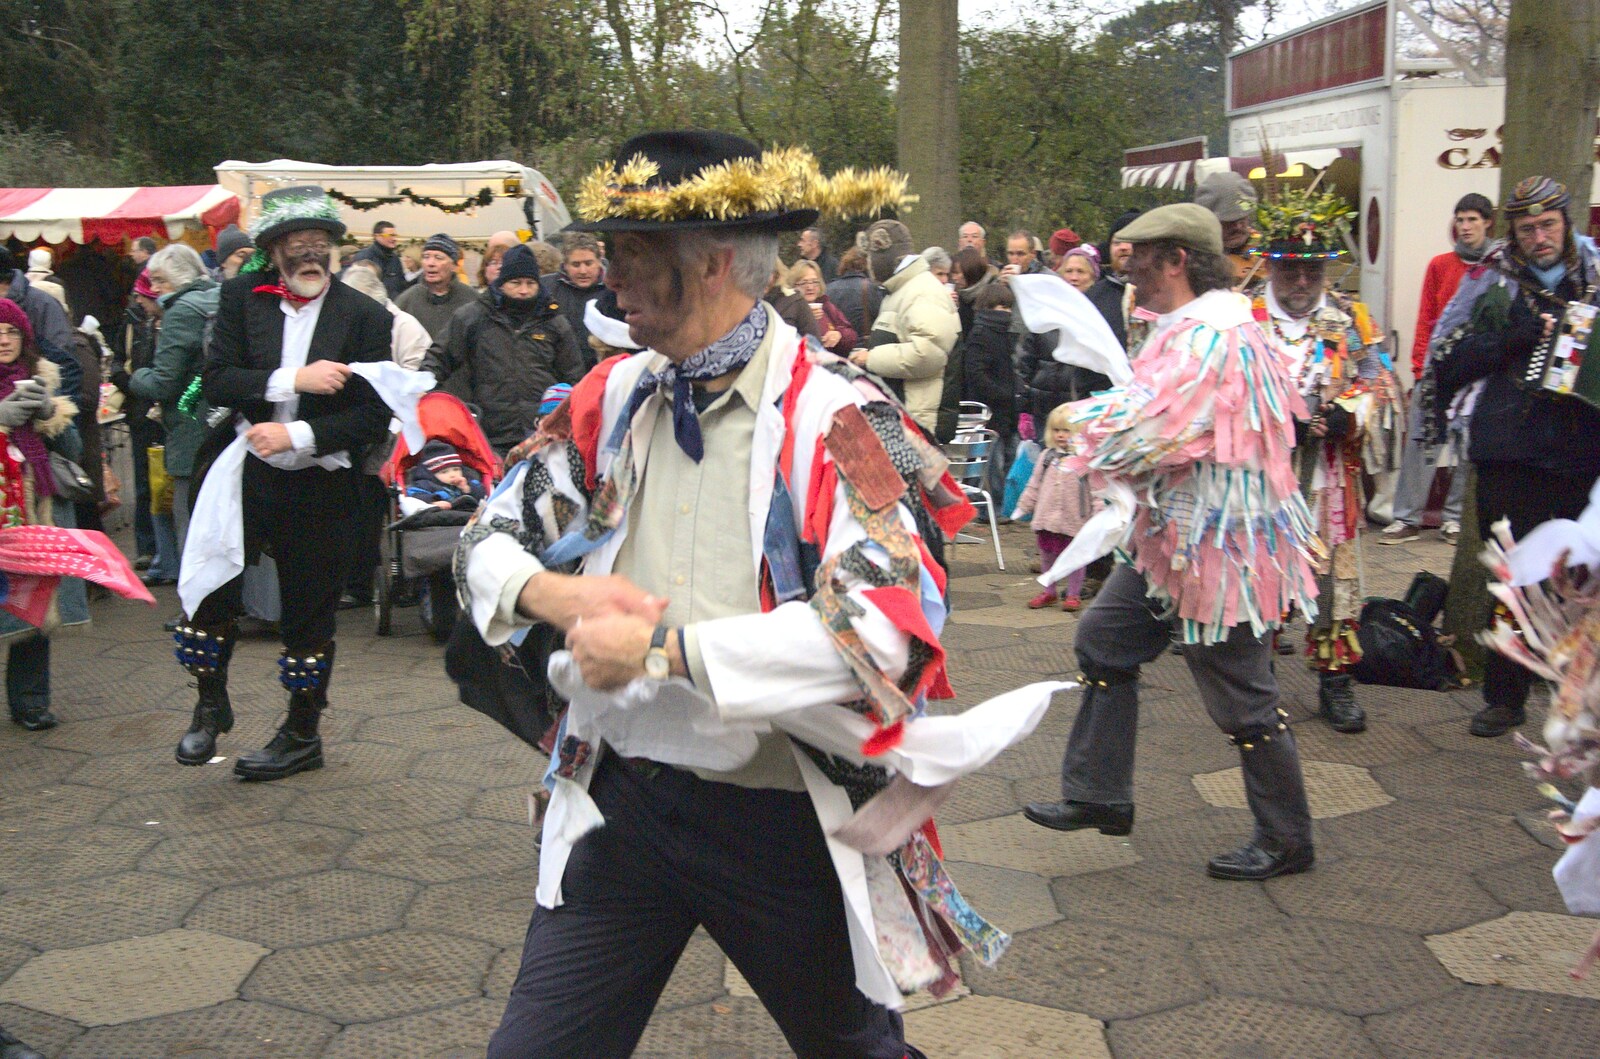 A Christmas Fair, Bury St. Edmunds, Suffolk - 28th November 2010: Waving handkerchiefs around